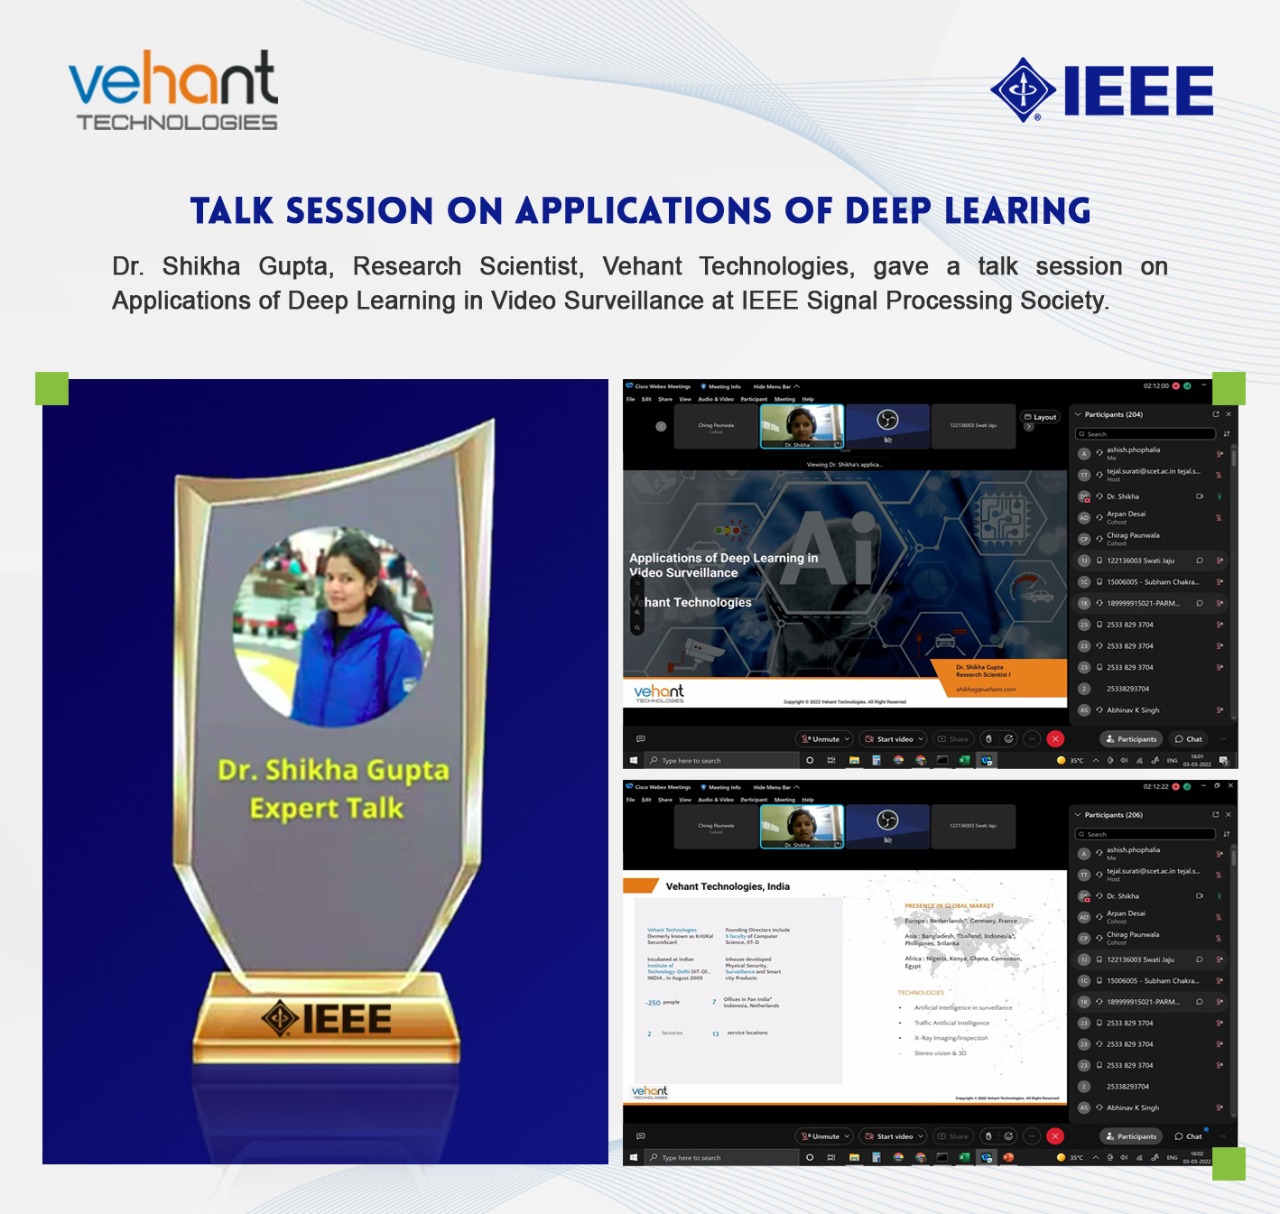 Vehant Technologies : Key People